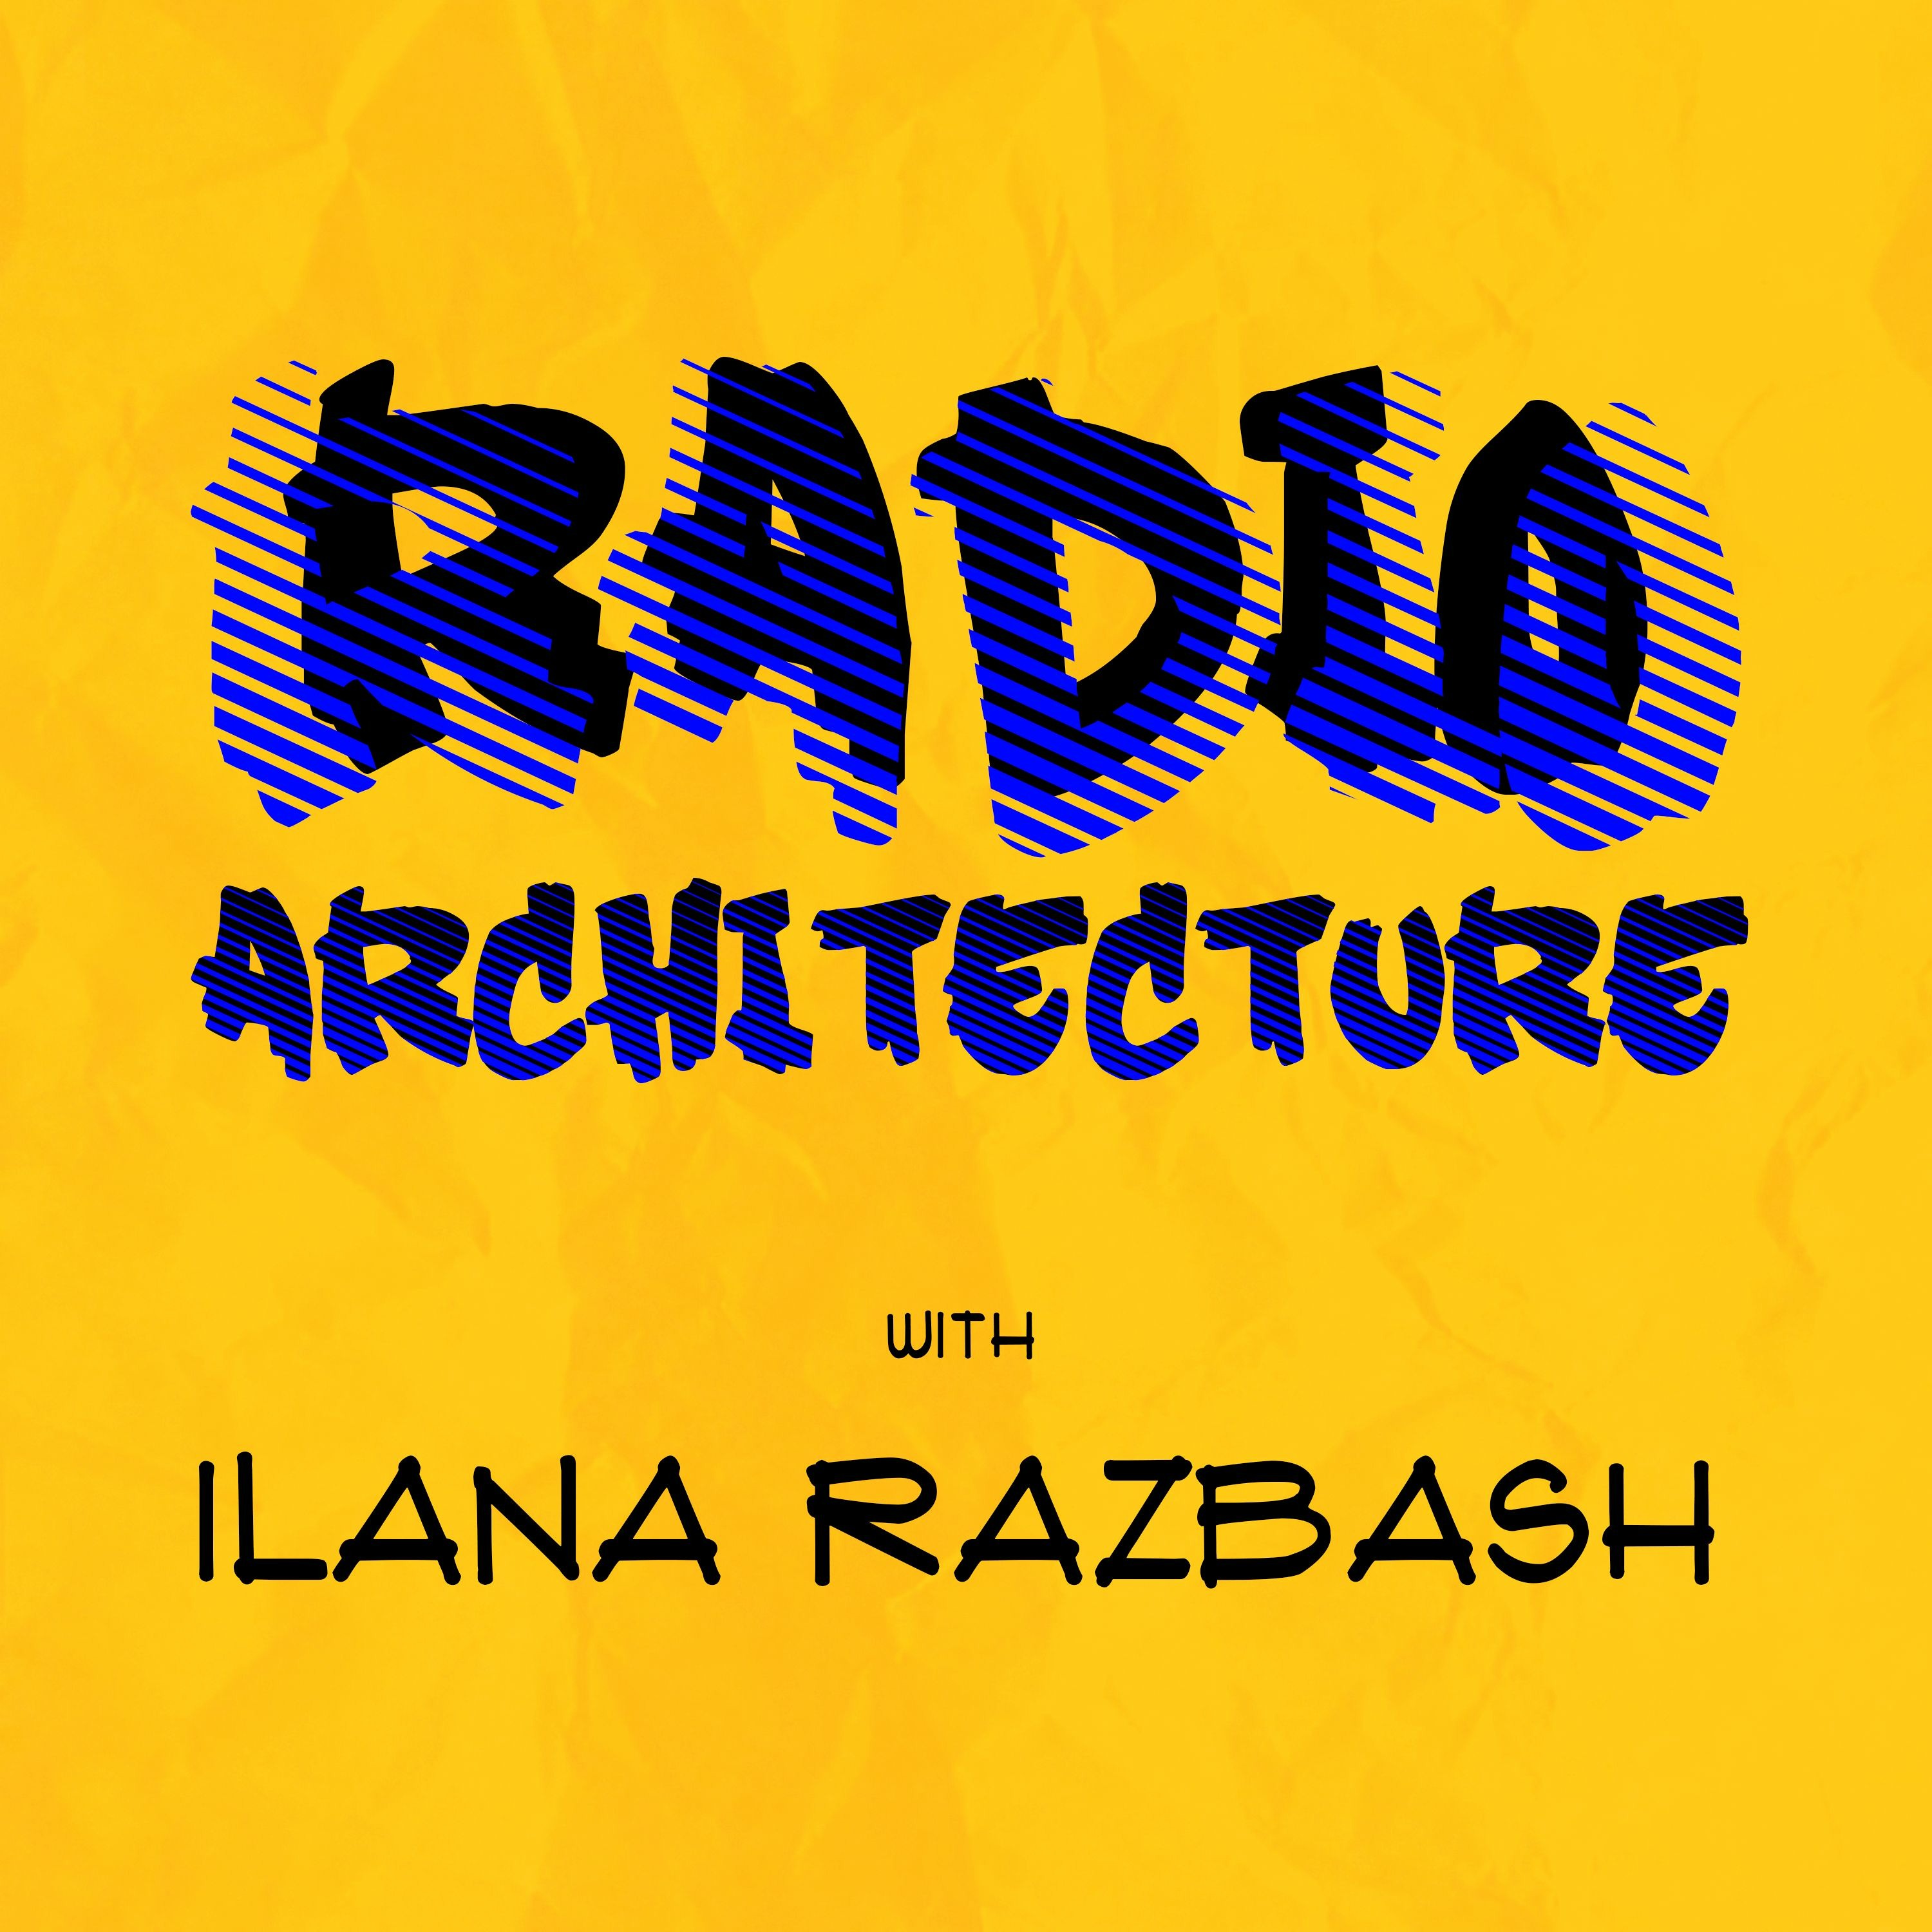 Radio Architecture With Ilana Razbash - Episode 27 (Rachael Bernstone)